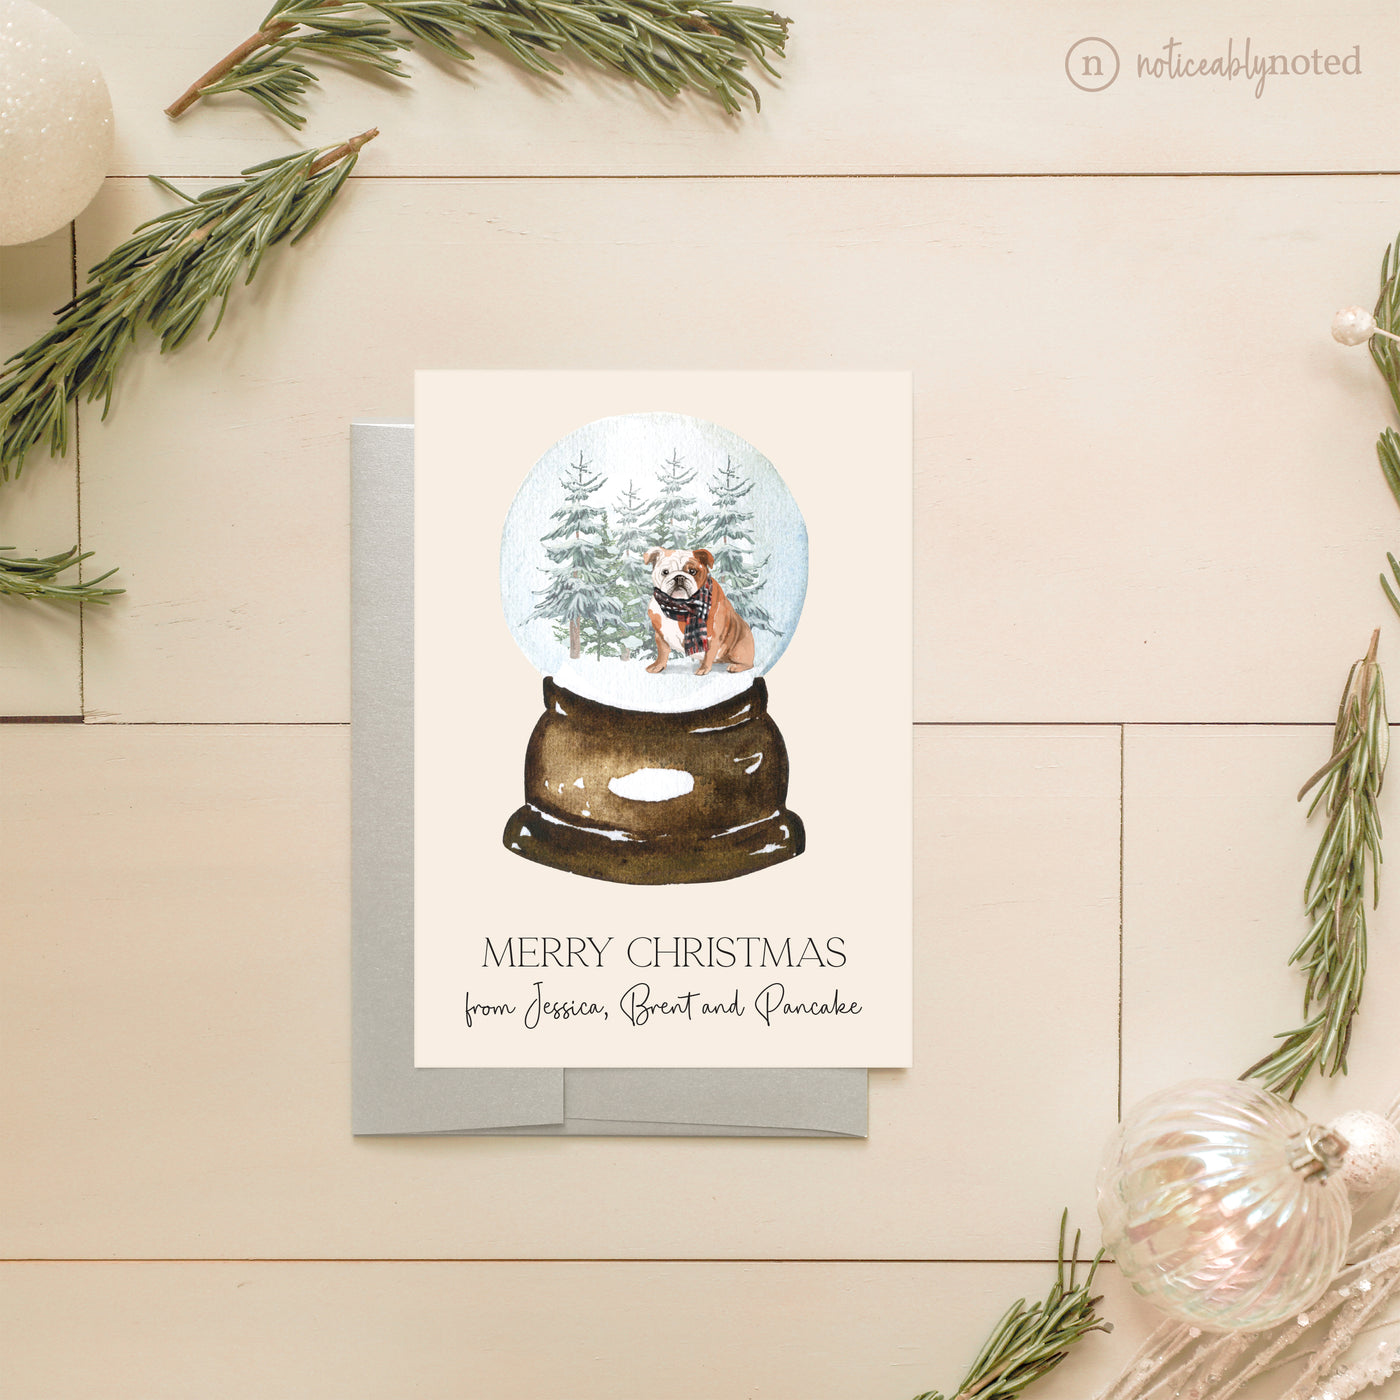 English Bulldog Holiday Greeting Cards | Noticeably Noted